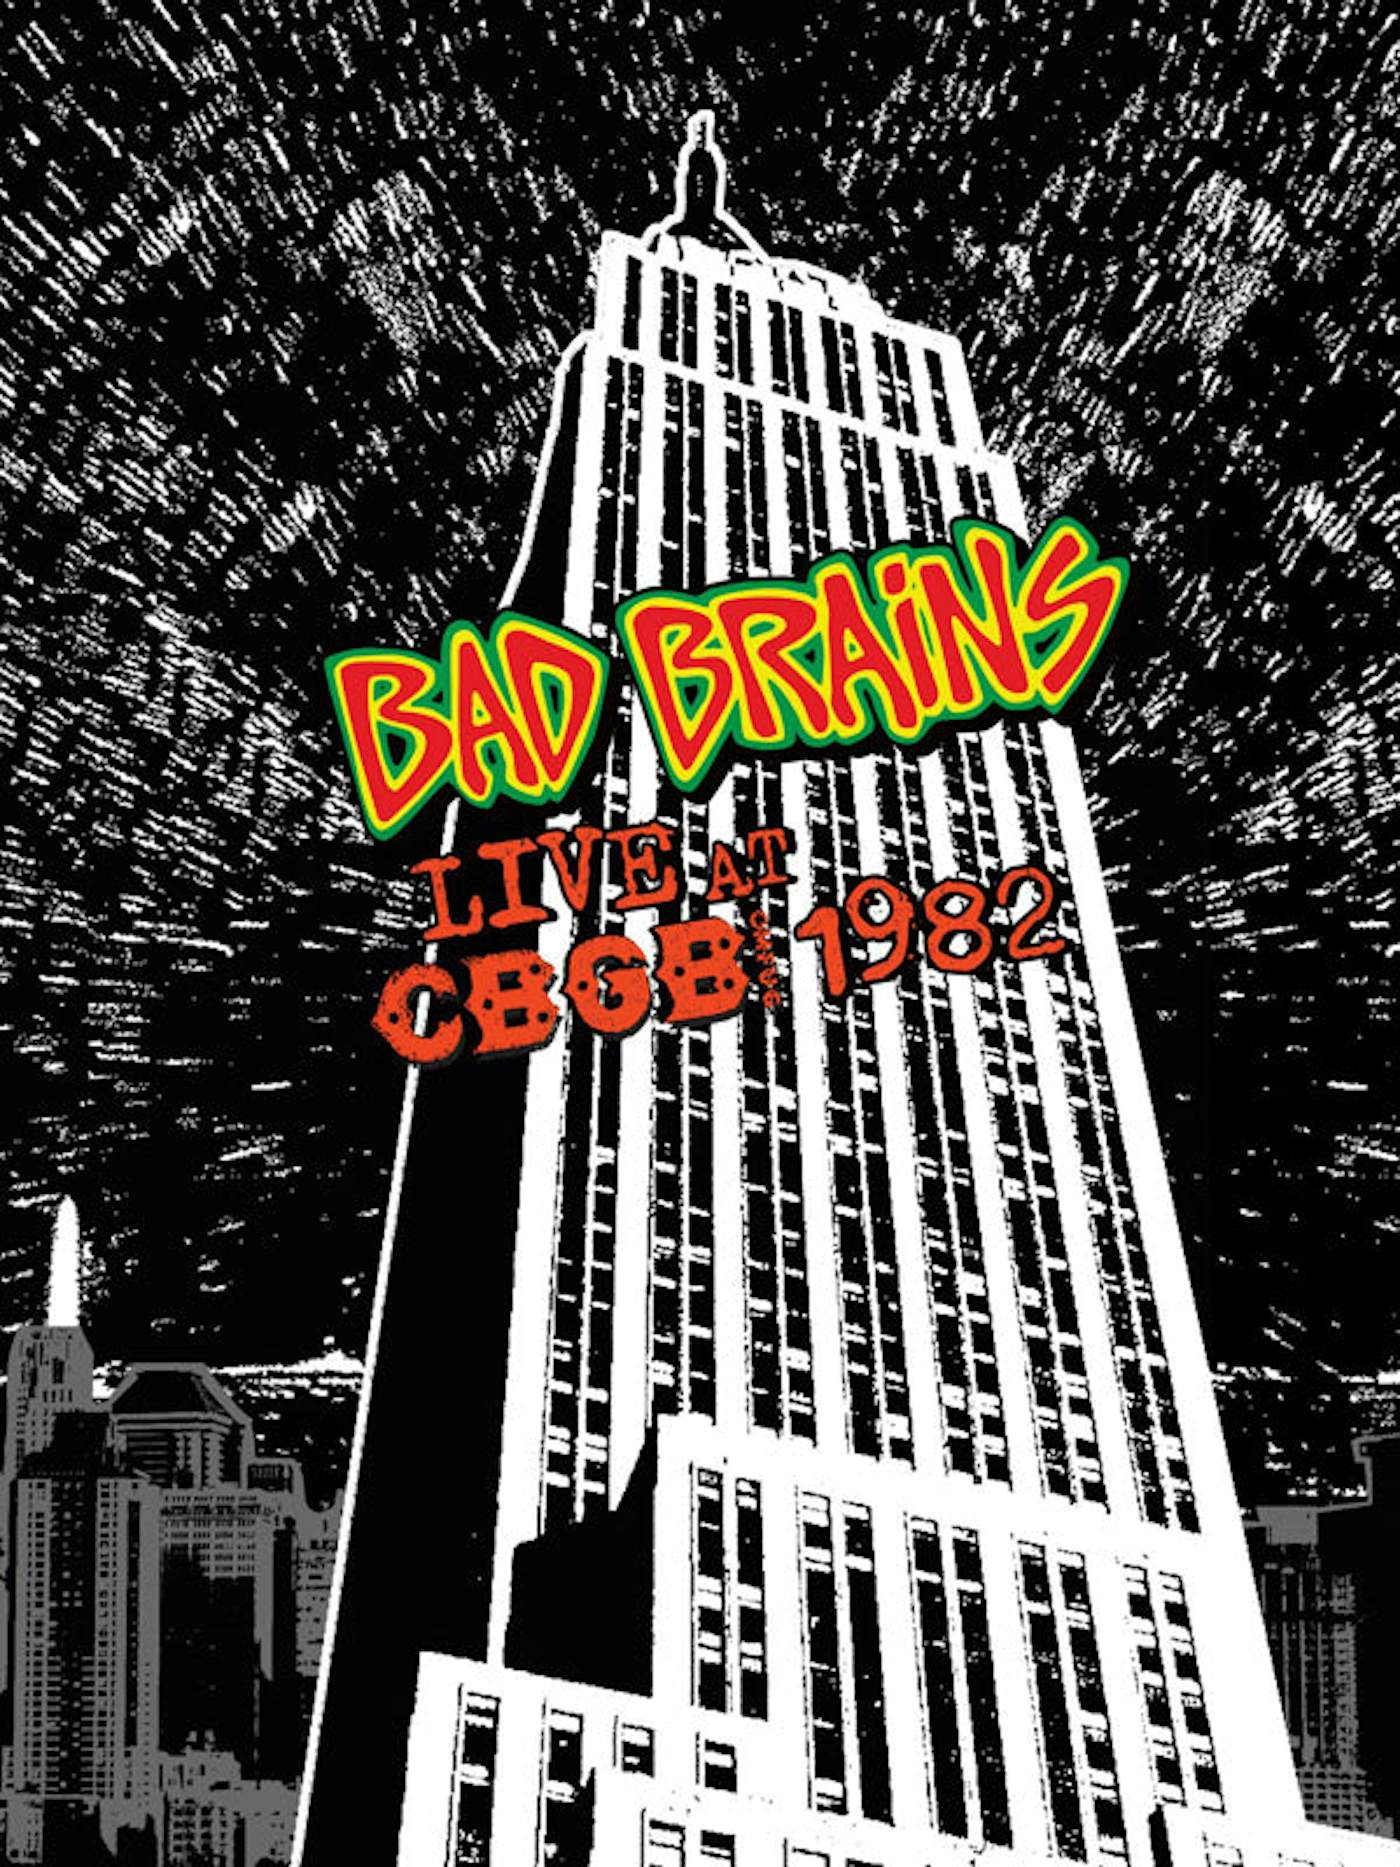 Bad Brains DVD - Live At Cbgb 1982